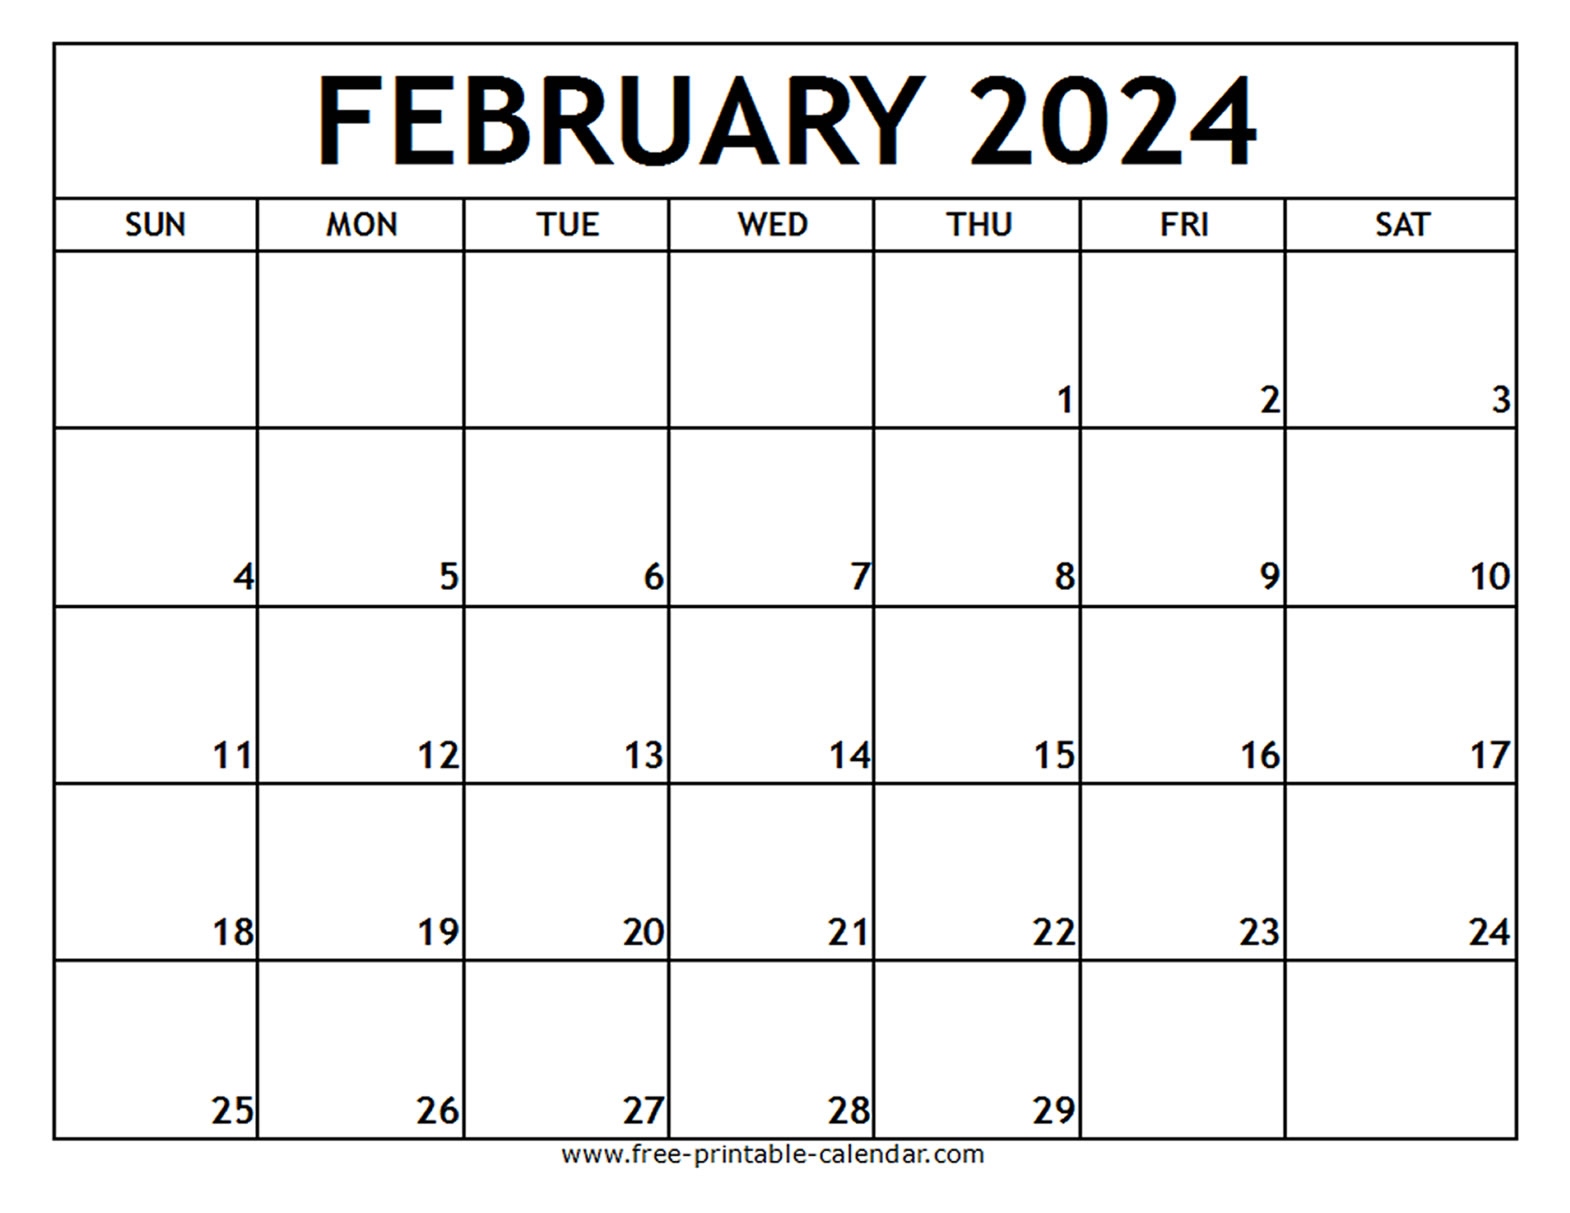 February 2024 Printable Calendar - Free-Printable-Calendar with regard to Free Printable Australian 2024 Monthly Calendar